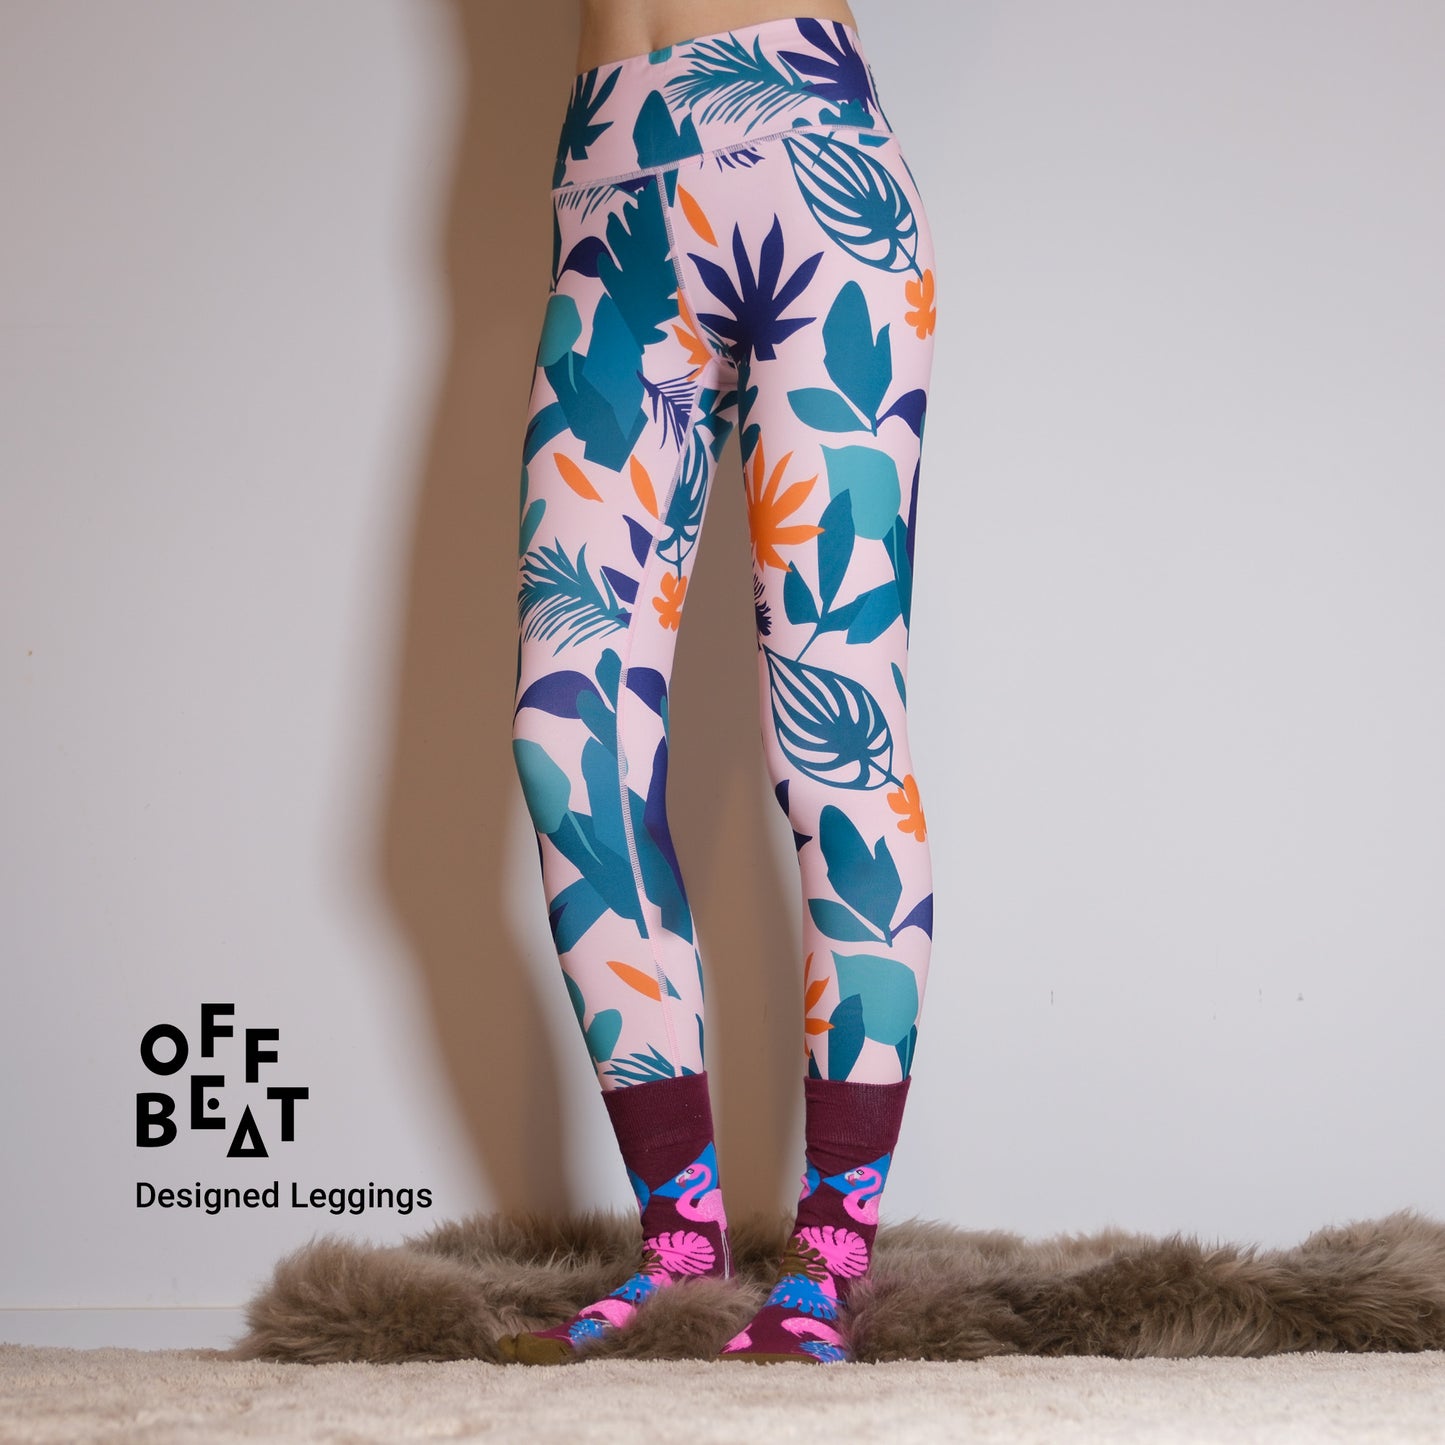 Sport/Yoga designed leggings from Offbeat, blue leaf